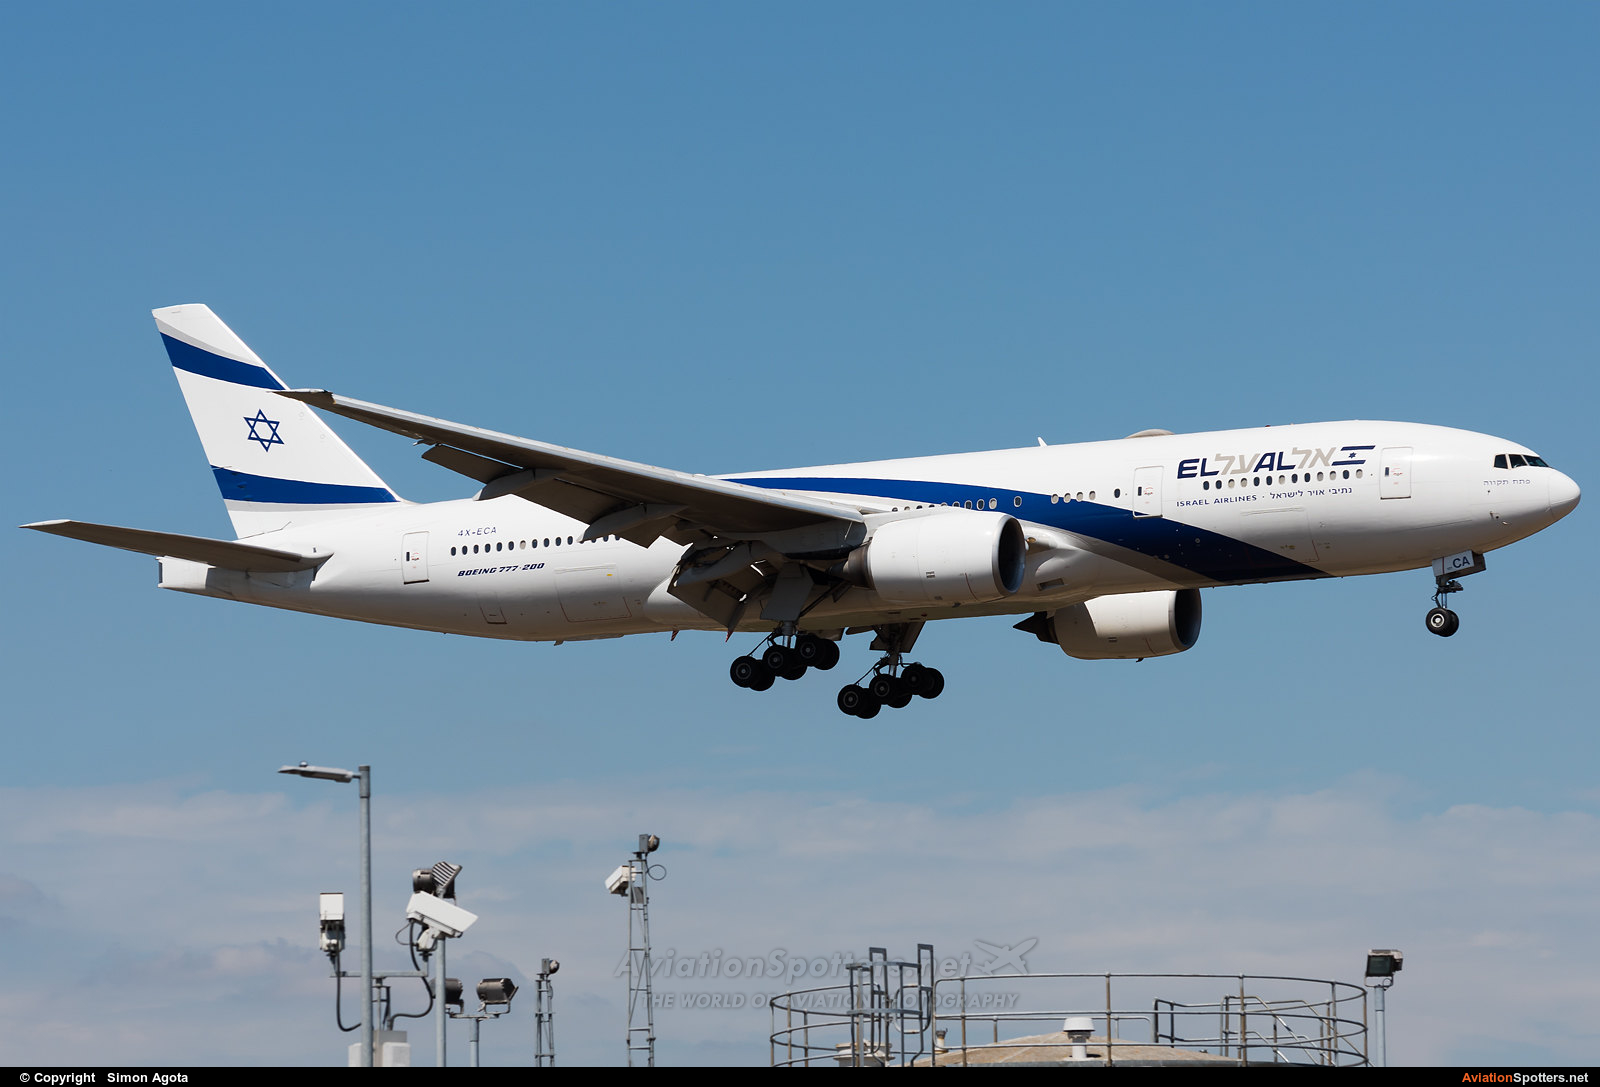 El Al Israel Airlines  -  777-200ER  (4X-ECA) By Simon Agota (goti80)